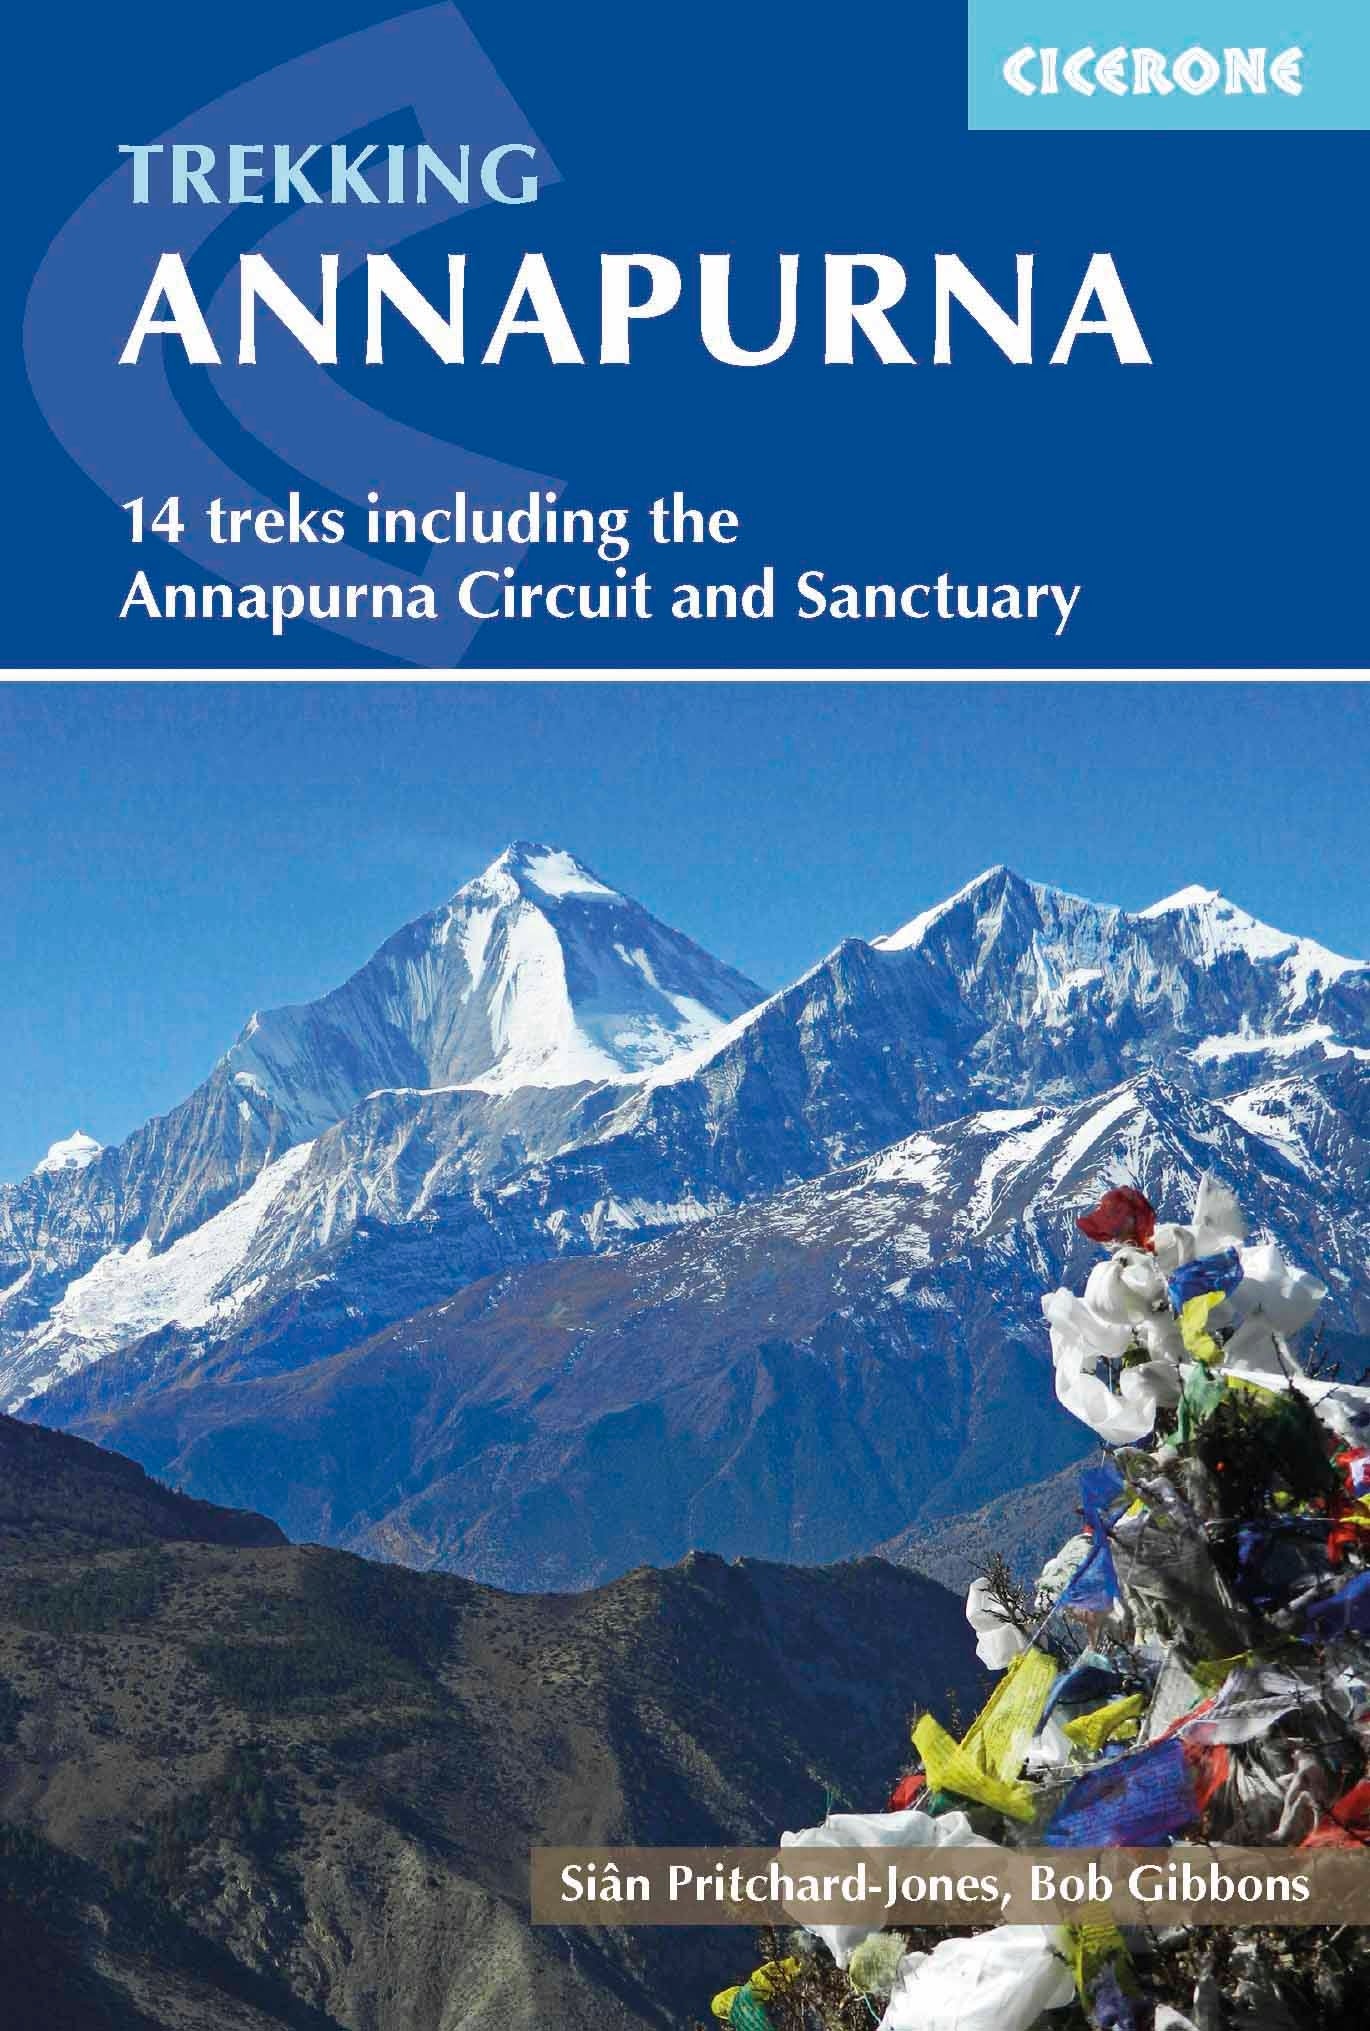 Trekking Annapurna - Cicerone Press Trekking Guide